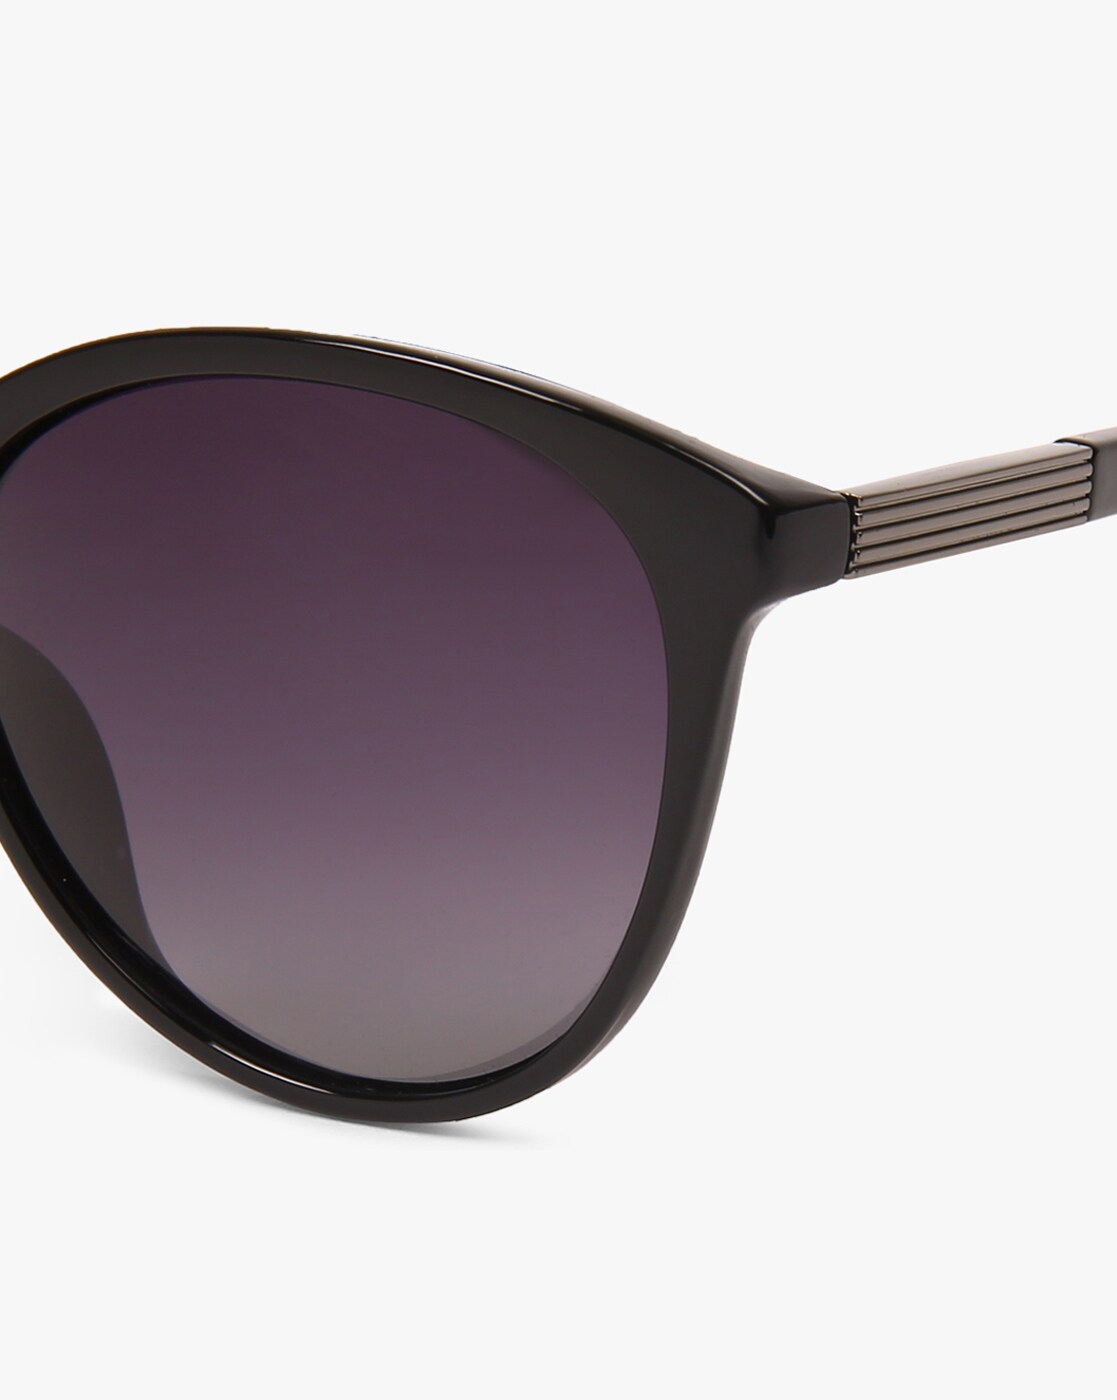 Buy Mac V MacV Cateye Fashion Lens Sunglasses 001-9 - MCV online |  Looksgud.in